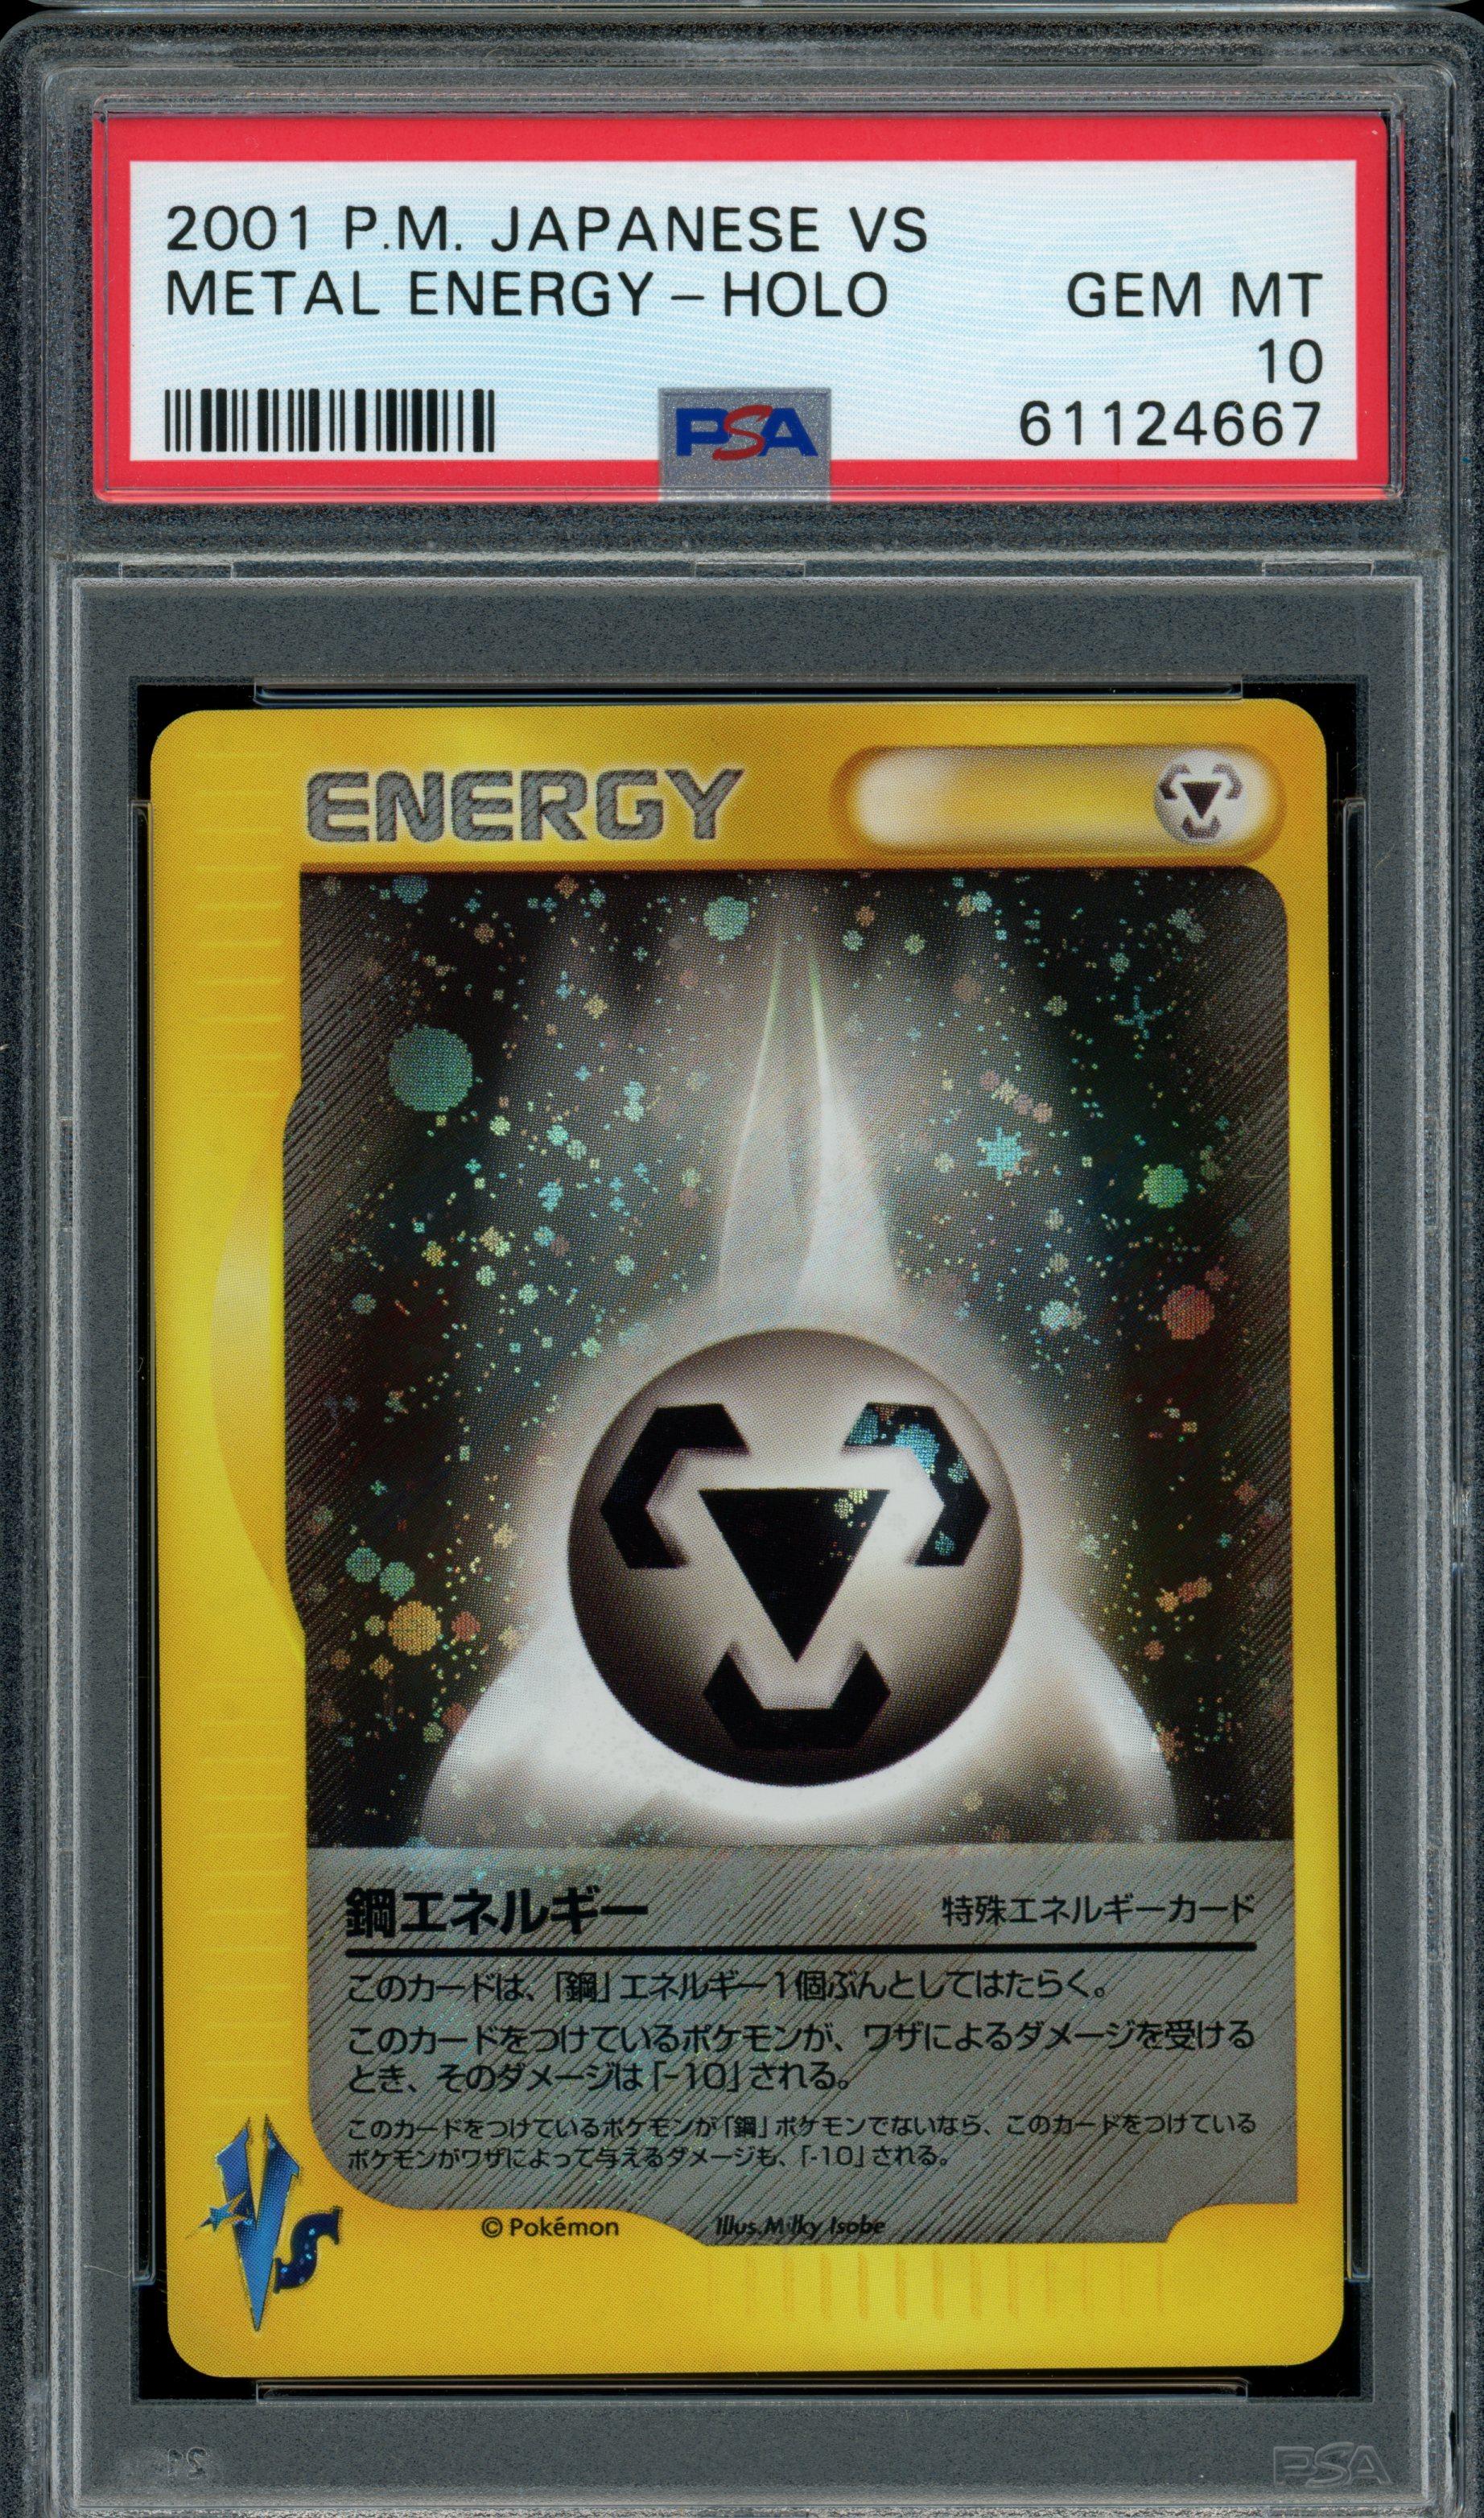 Auction Item 114070523149 TCG Cards 2009 Pokemon Japanese Arceus LV.X  Deck: Grass & Fire